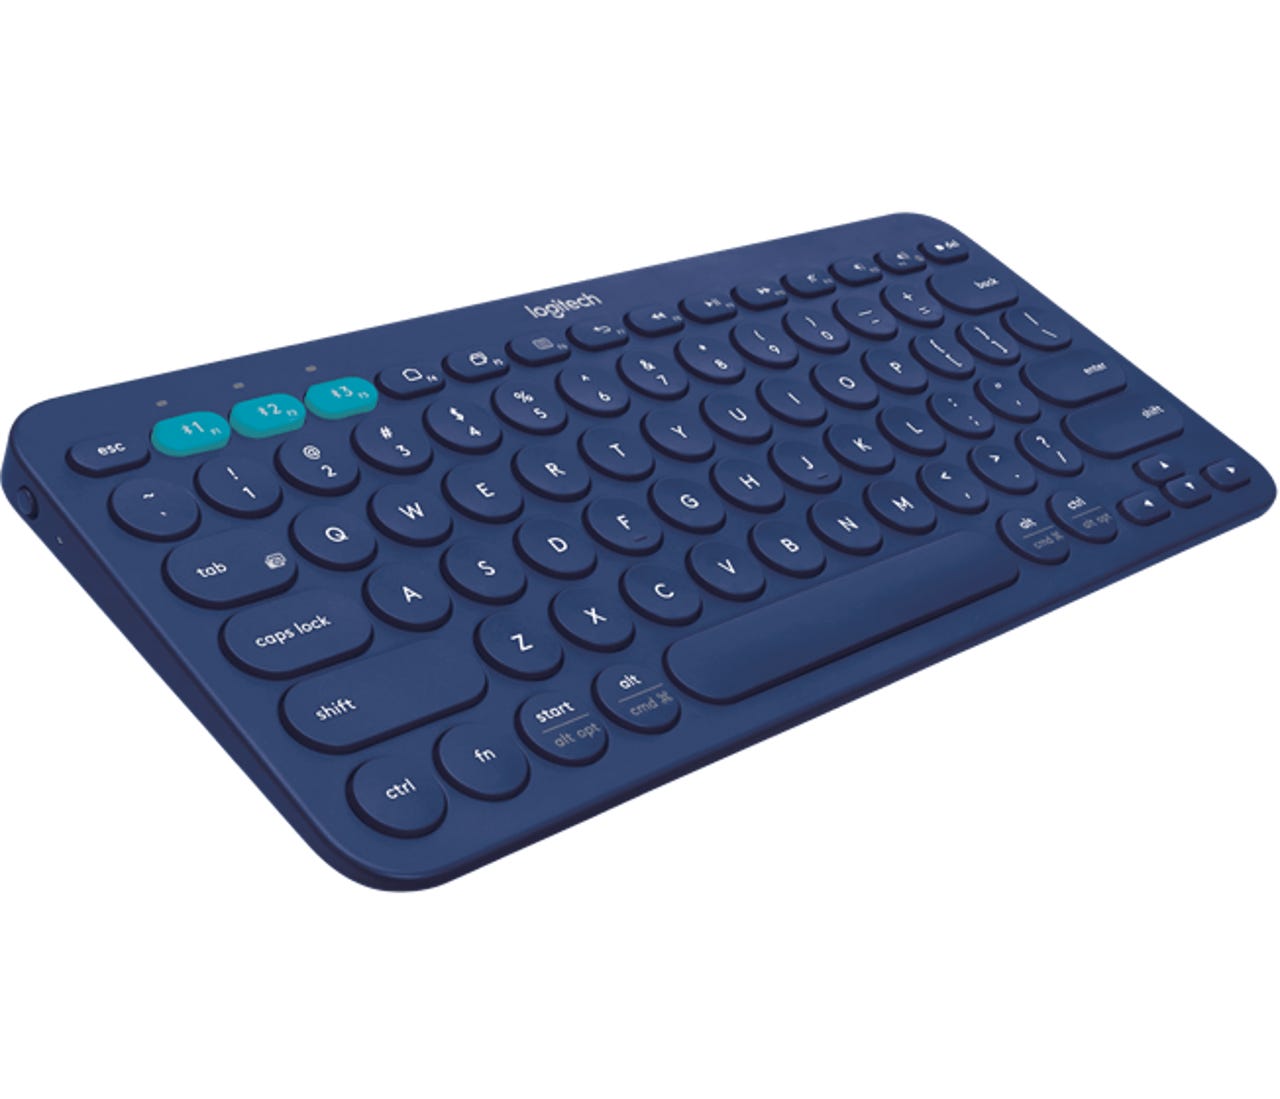 K380 Compact Multi-Device Bluetooth Keyboard | ZDNET